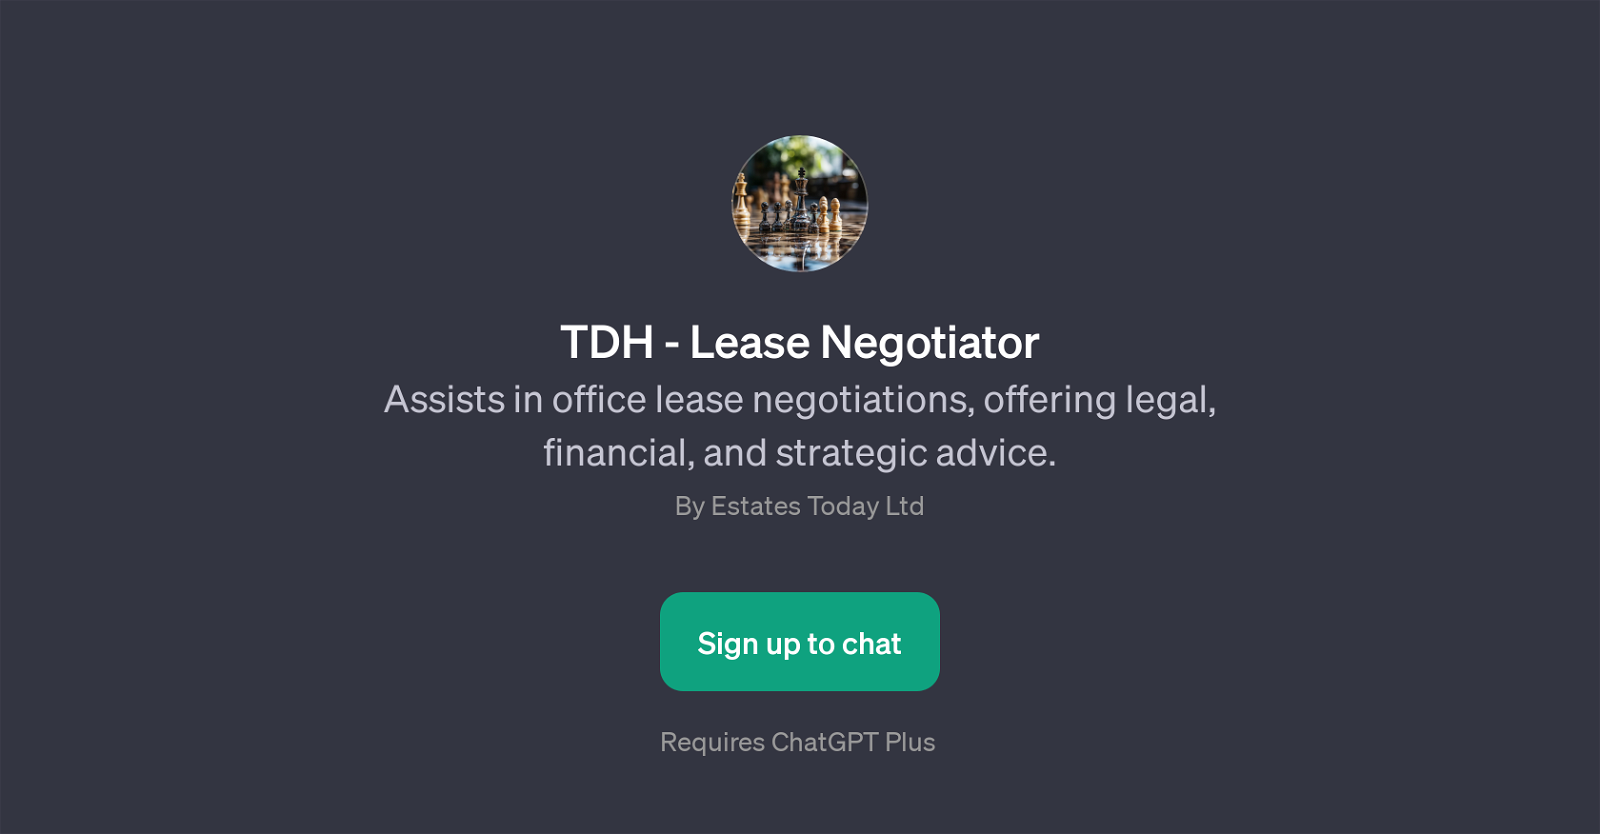 TDH - Lease Negotiator website